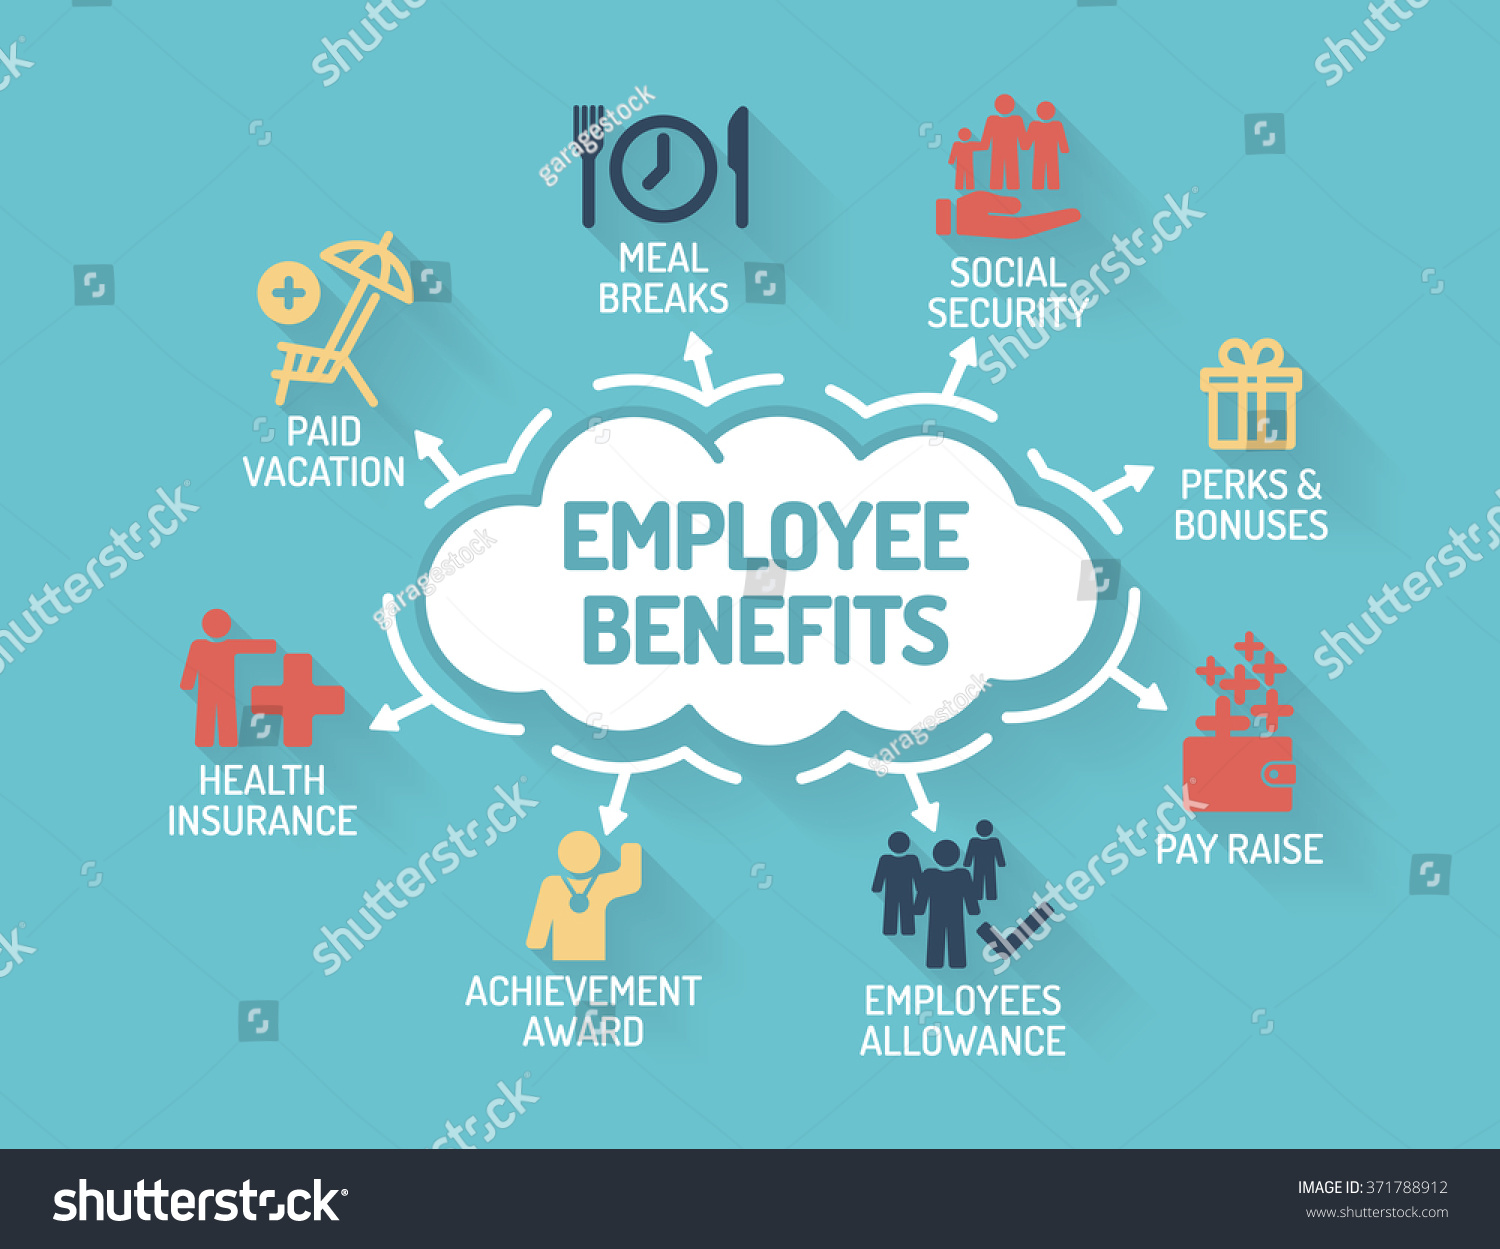 free clipart employee benefits - photo #19